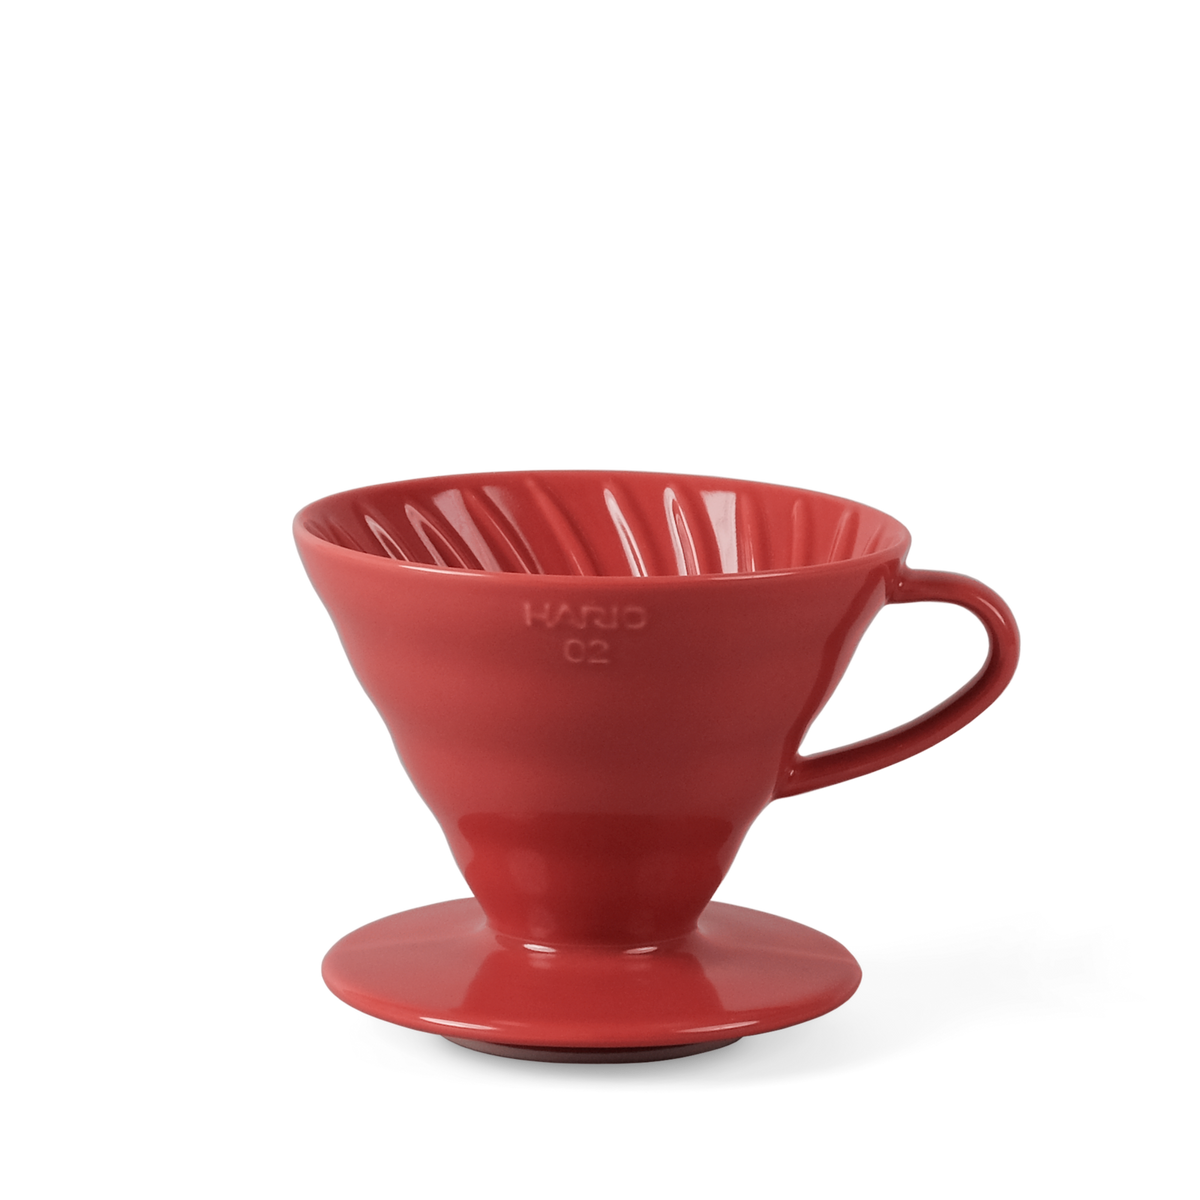 Hario V60 Coffee Dripper - 2 Cup Ceramic Red